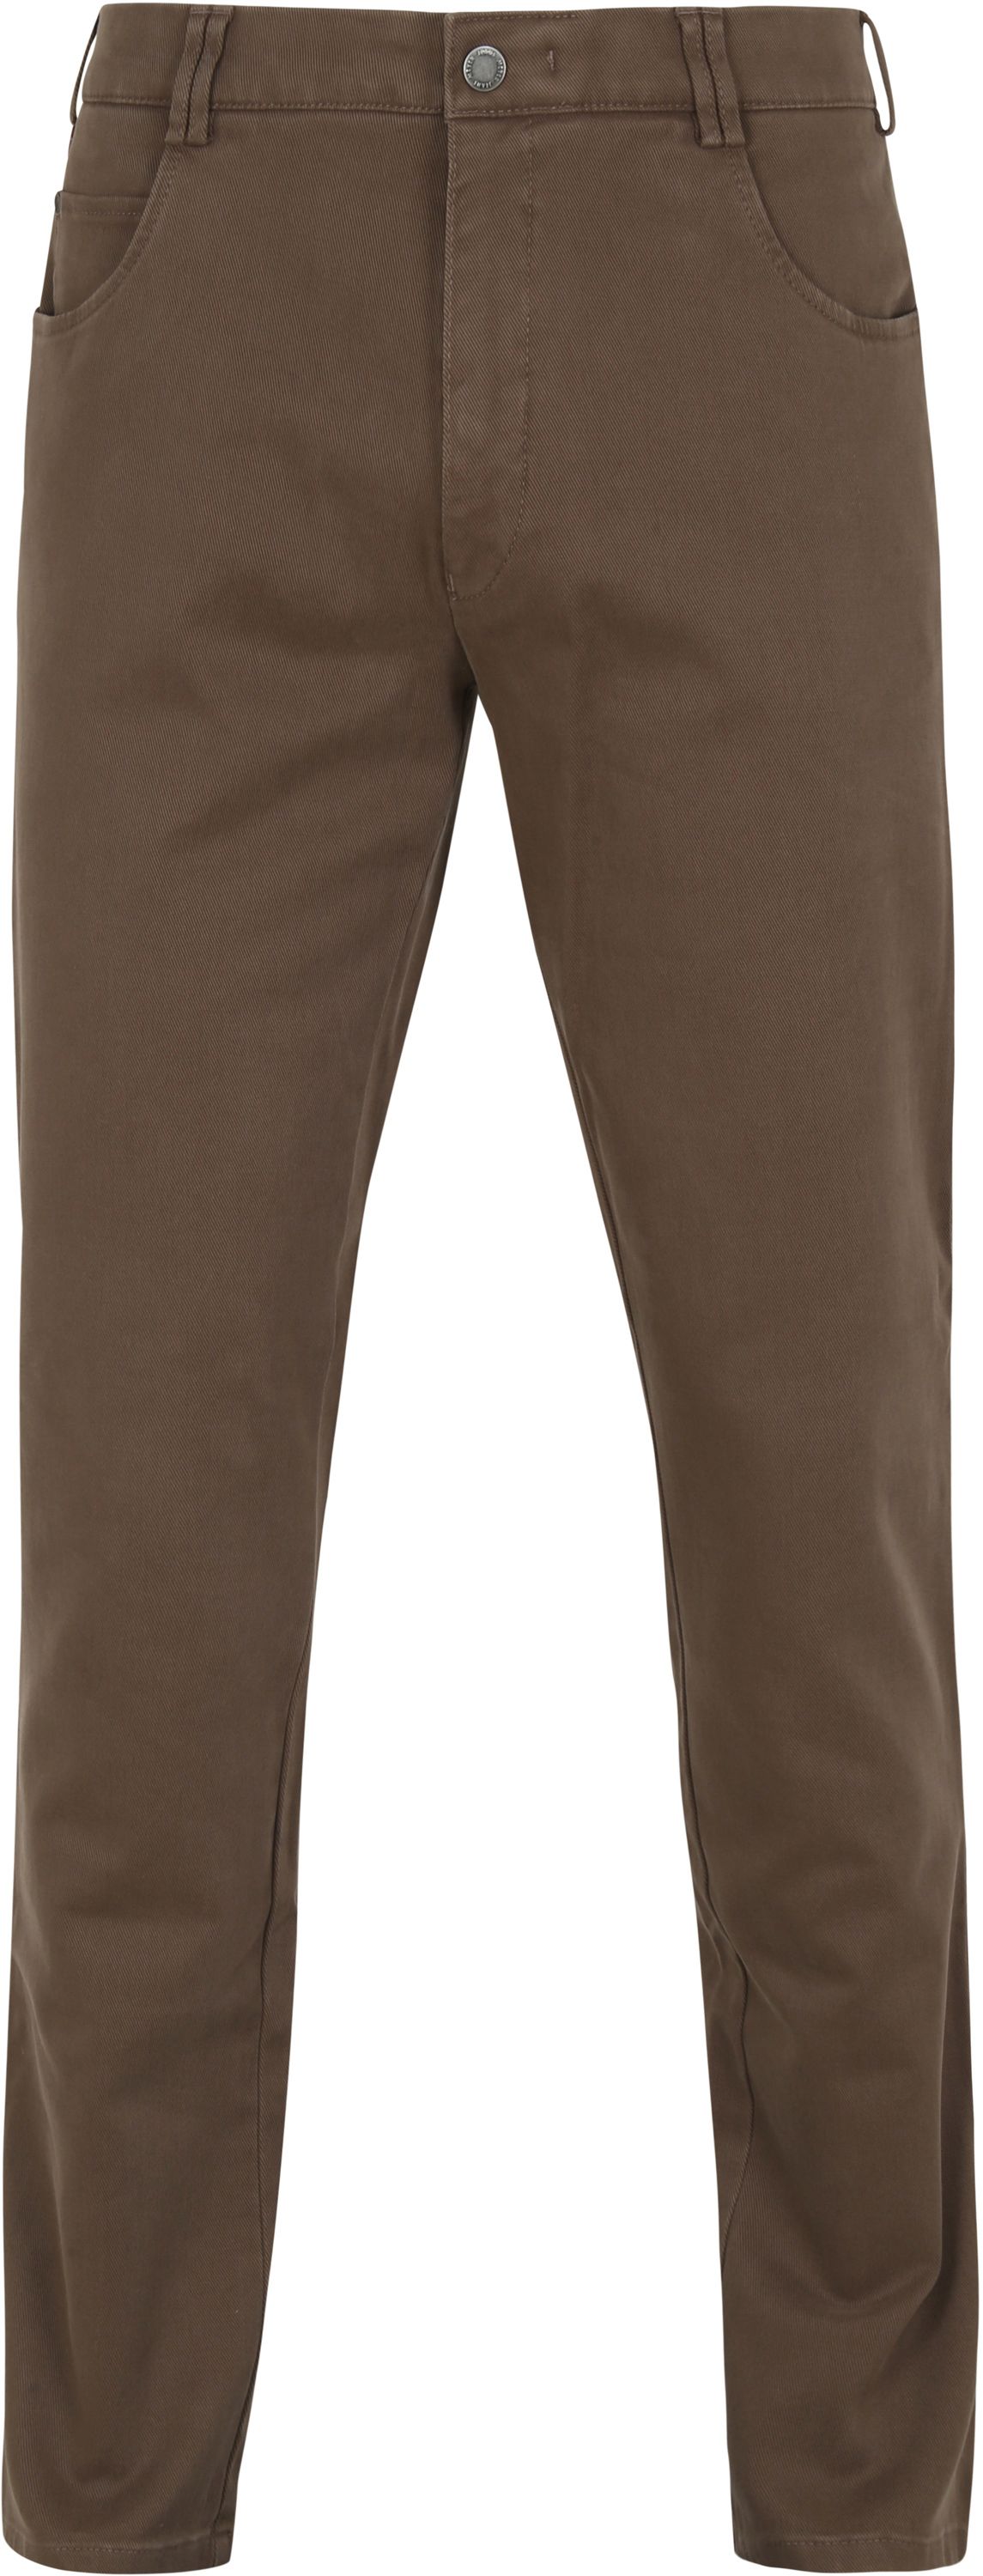 Meyer Pants Dubai Brown Taupe size W 36